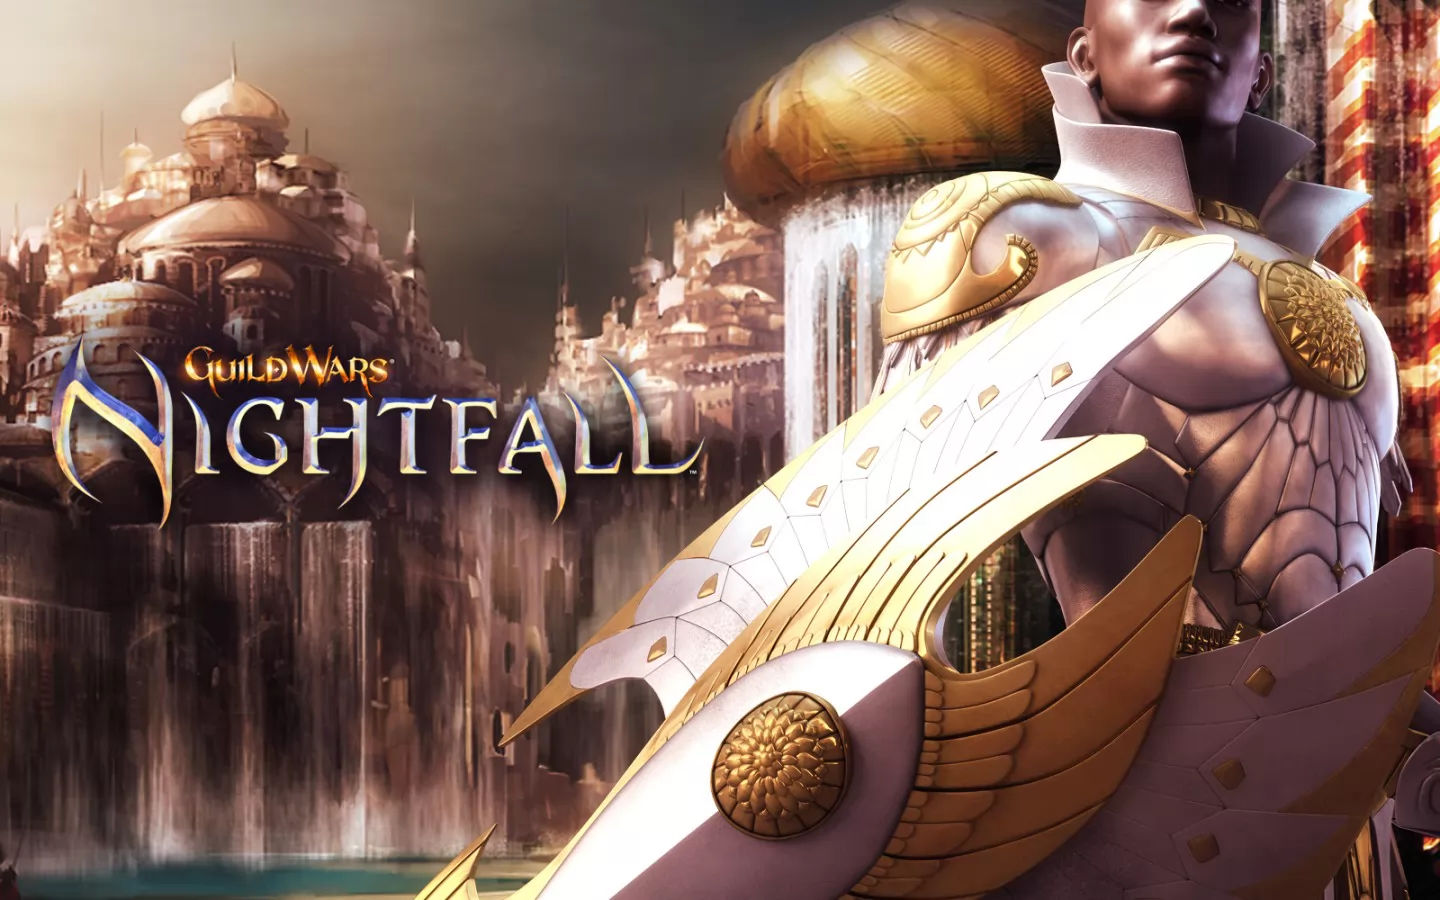 Guild Wars: Nightfall,   